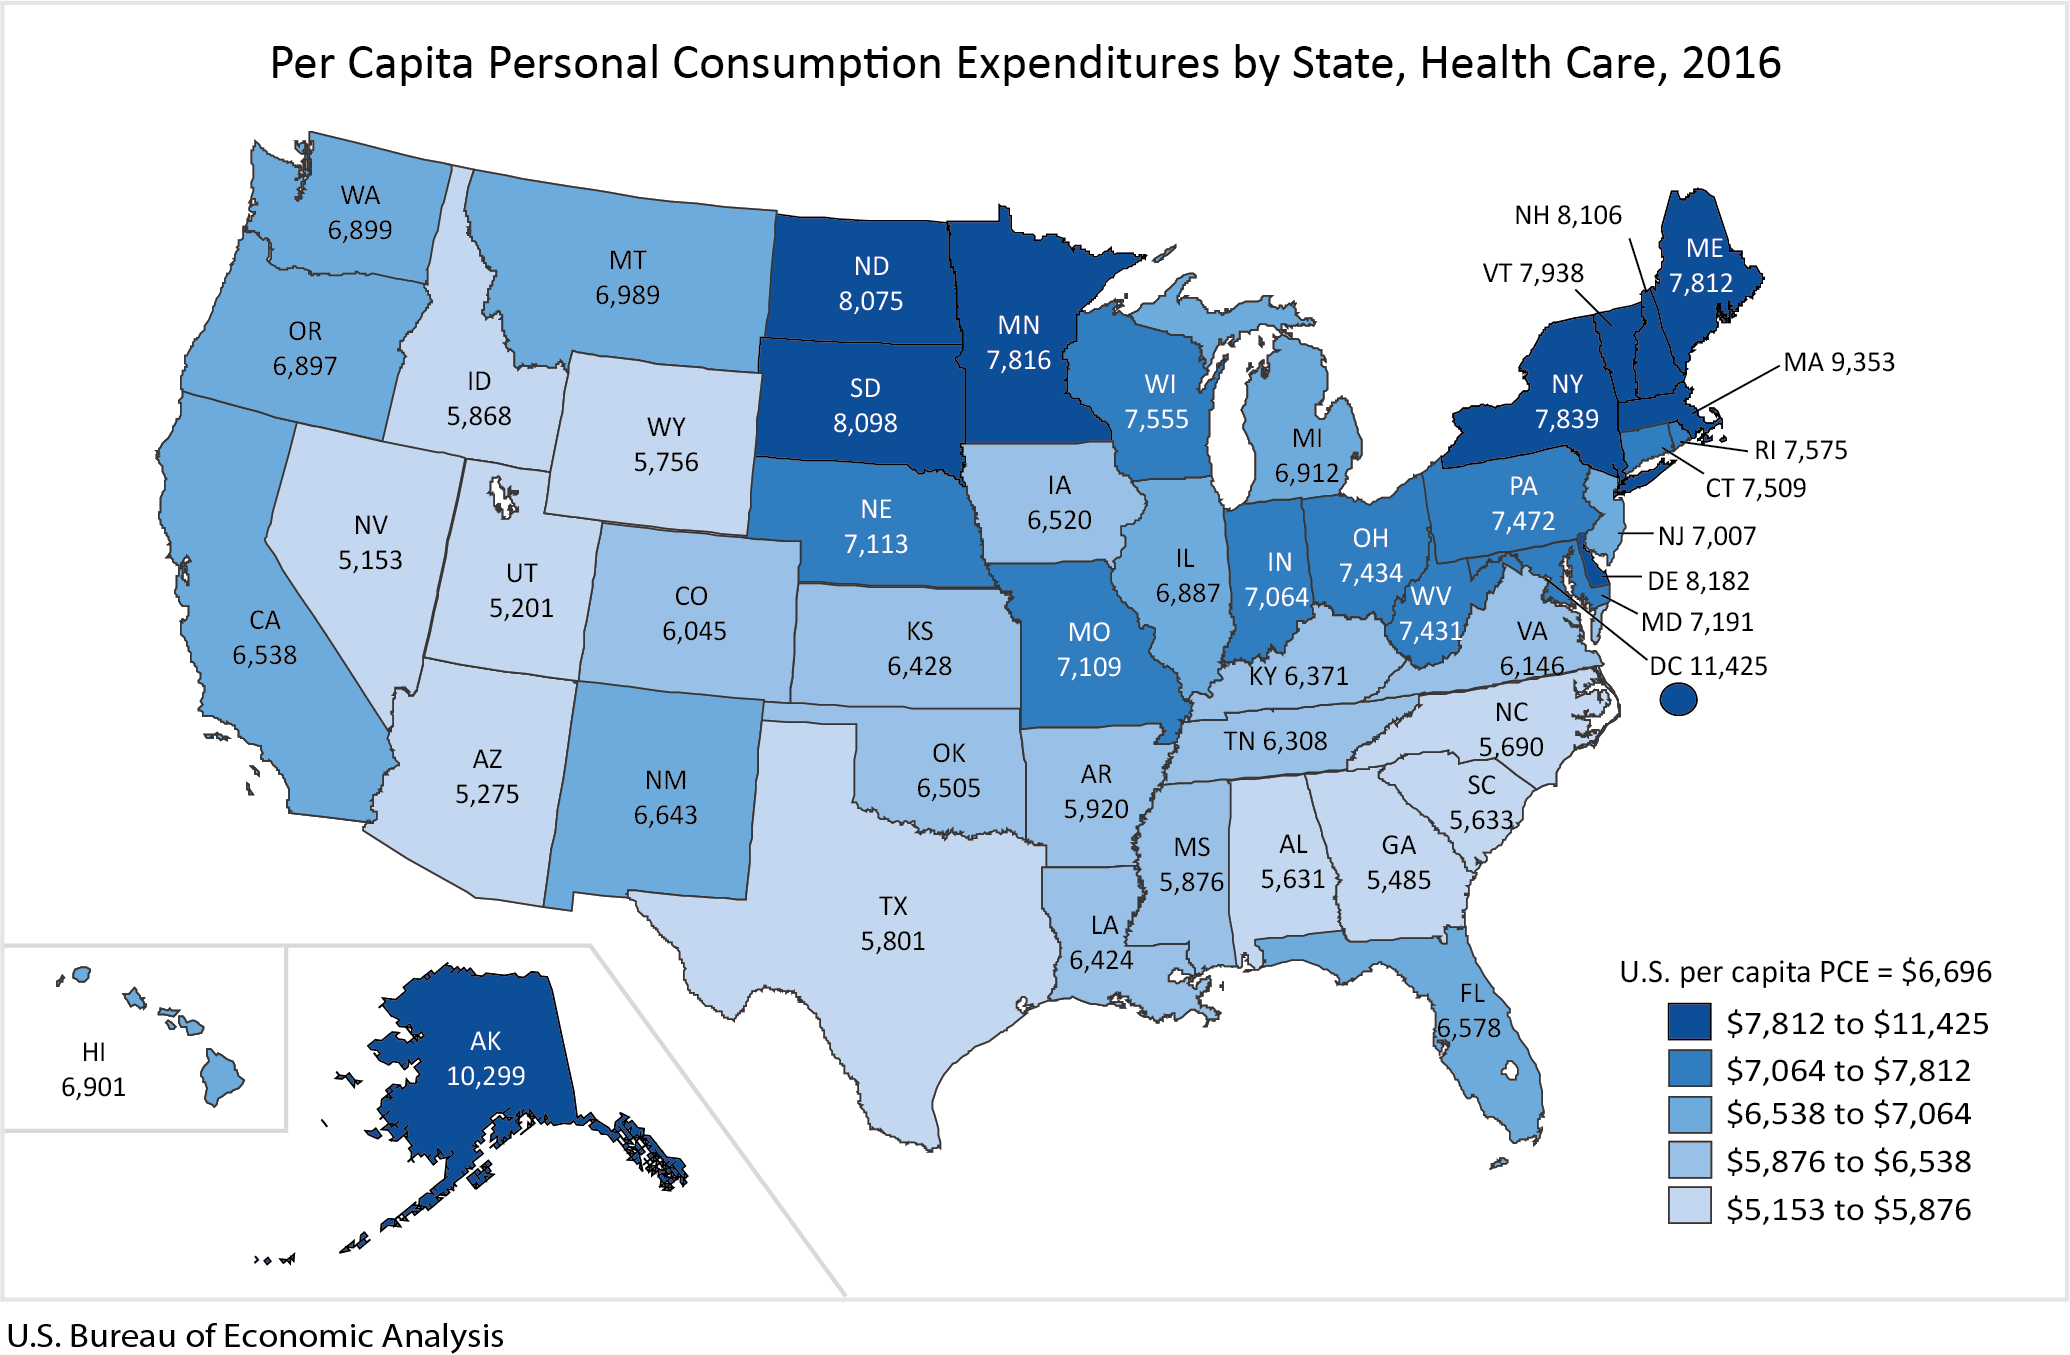 personal consumption expenditures